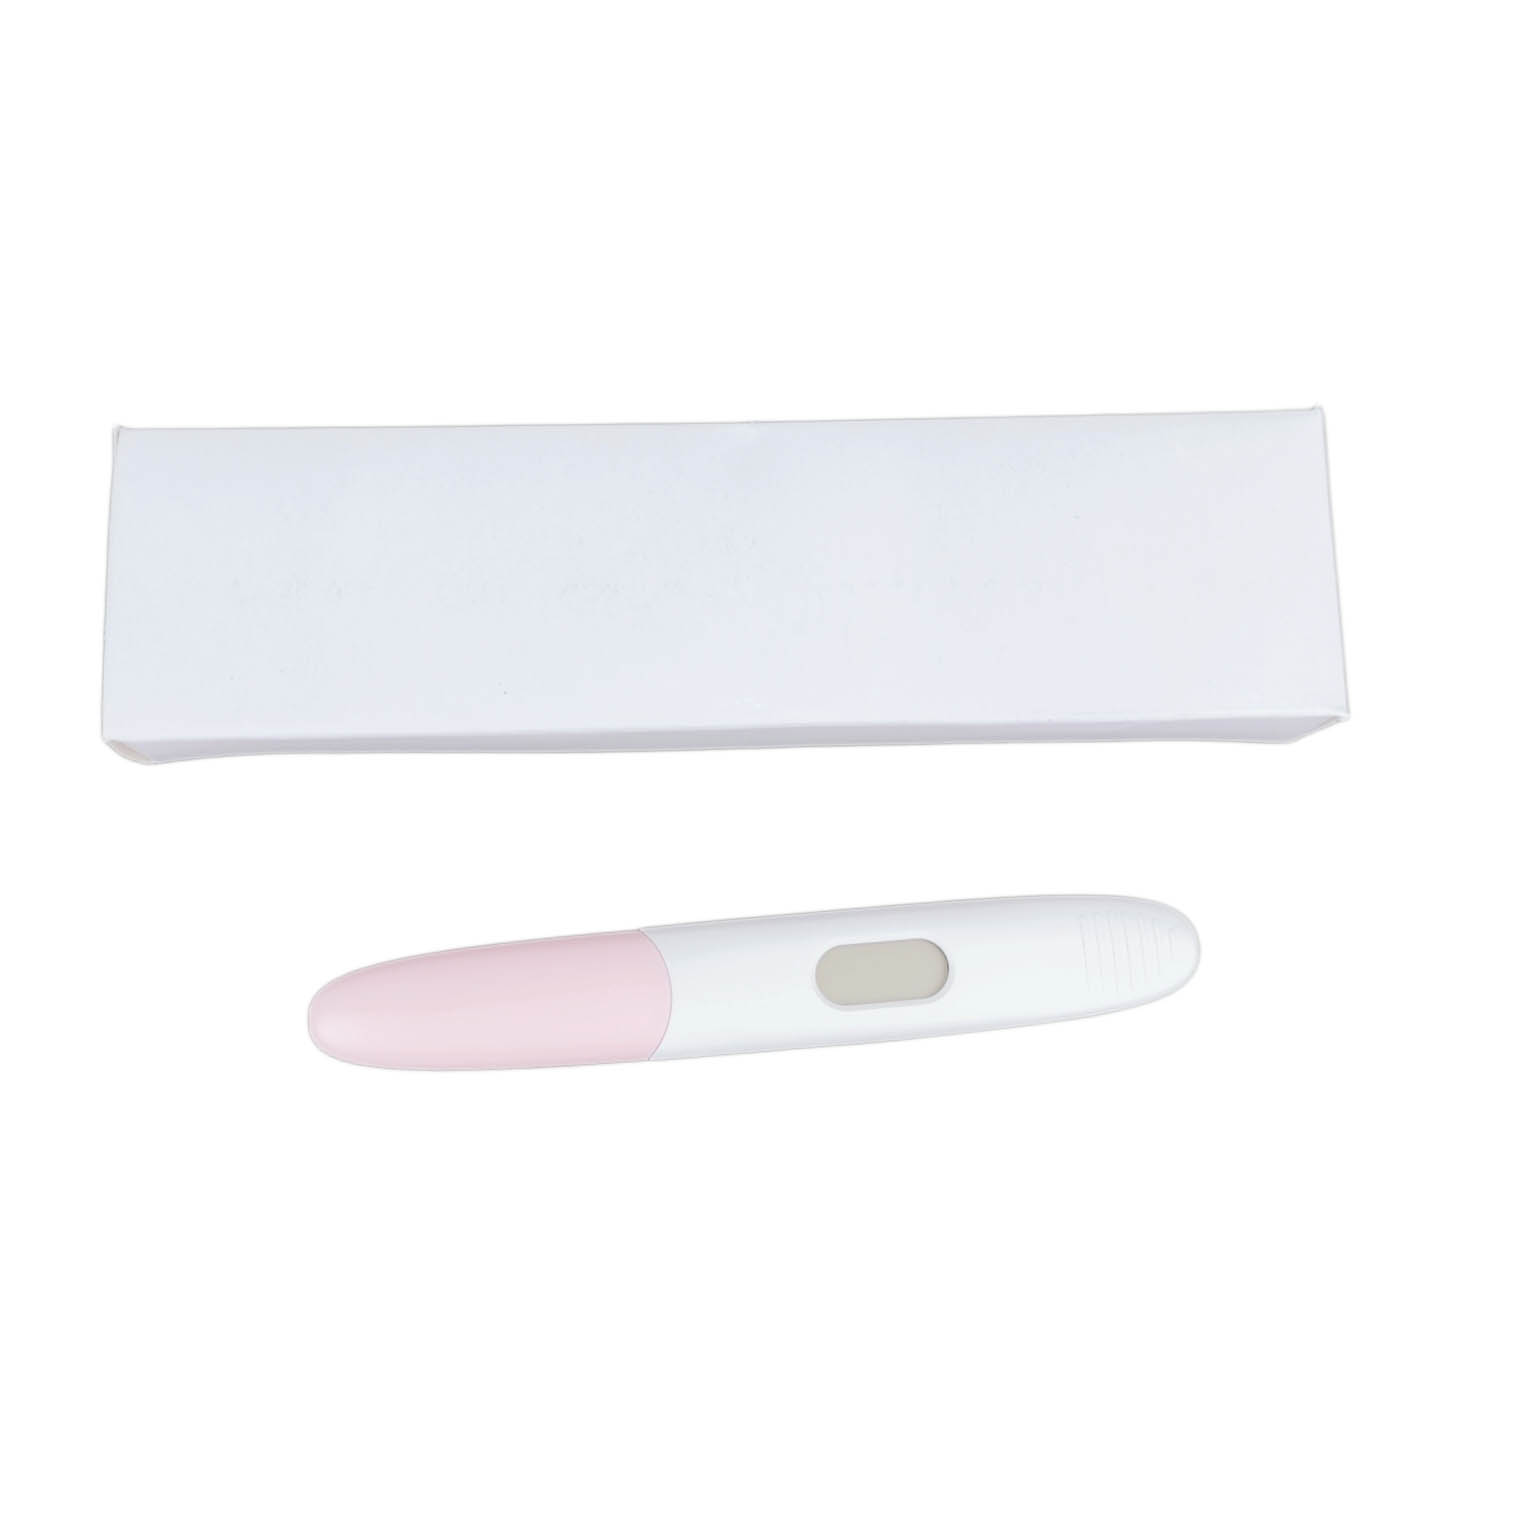 HCG Pregnancy Urine Test